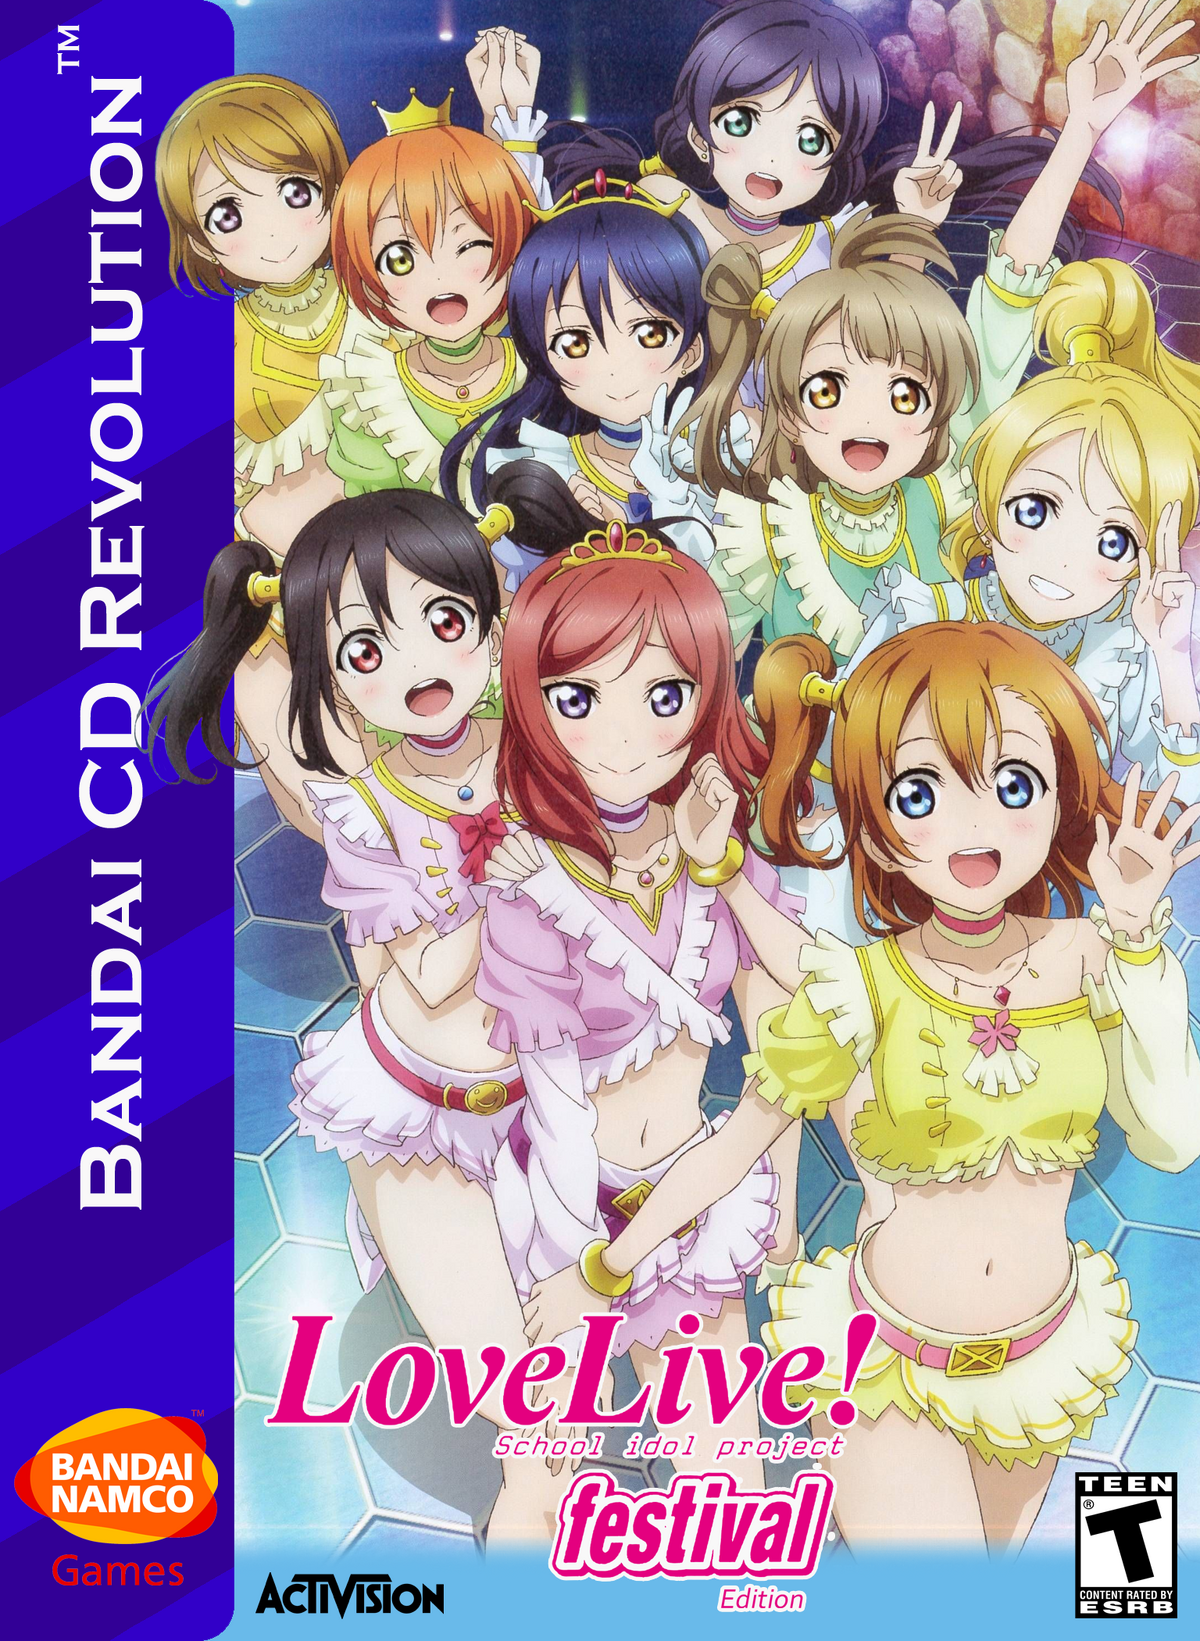 Love Live! School Idol Project - Desciclopédia